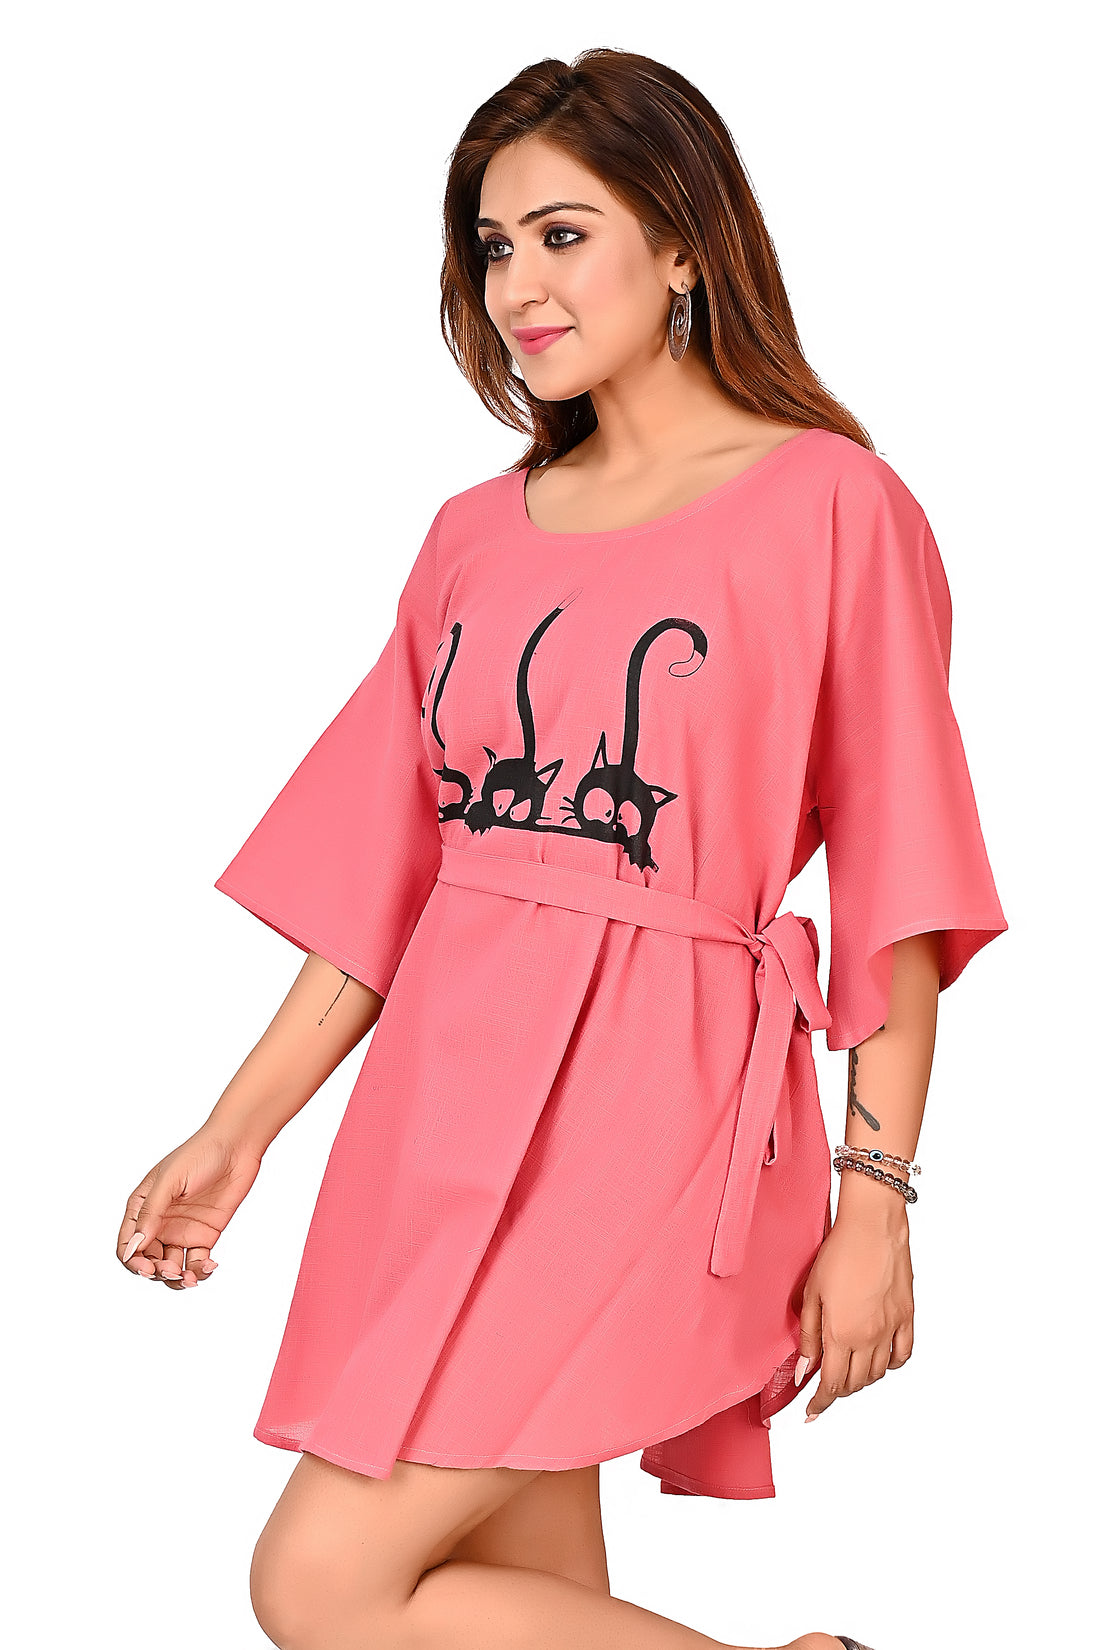 Nirmal online Premium Cotton Top for Women in Coral Pink Colour